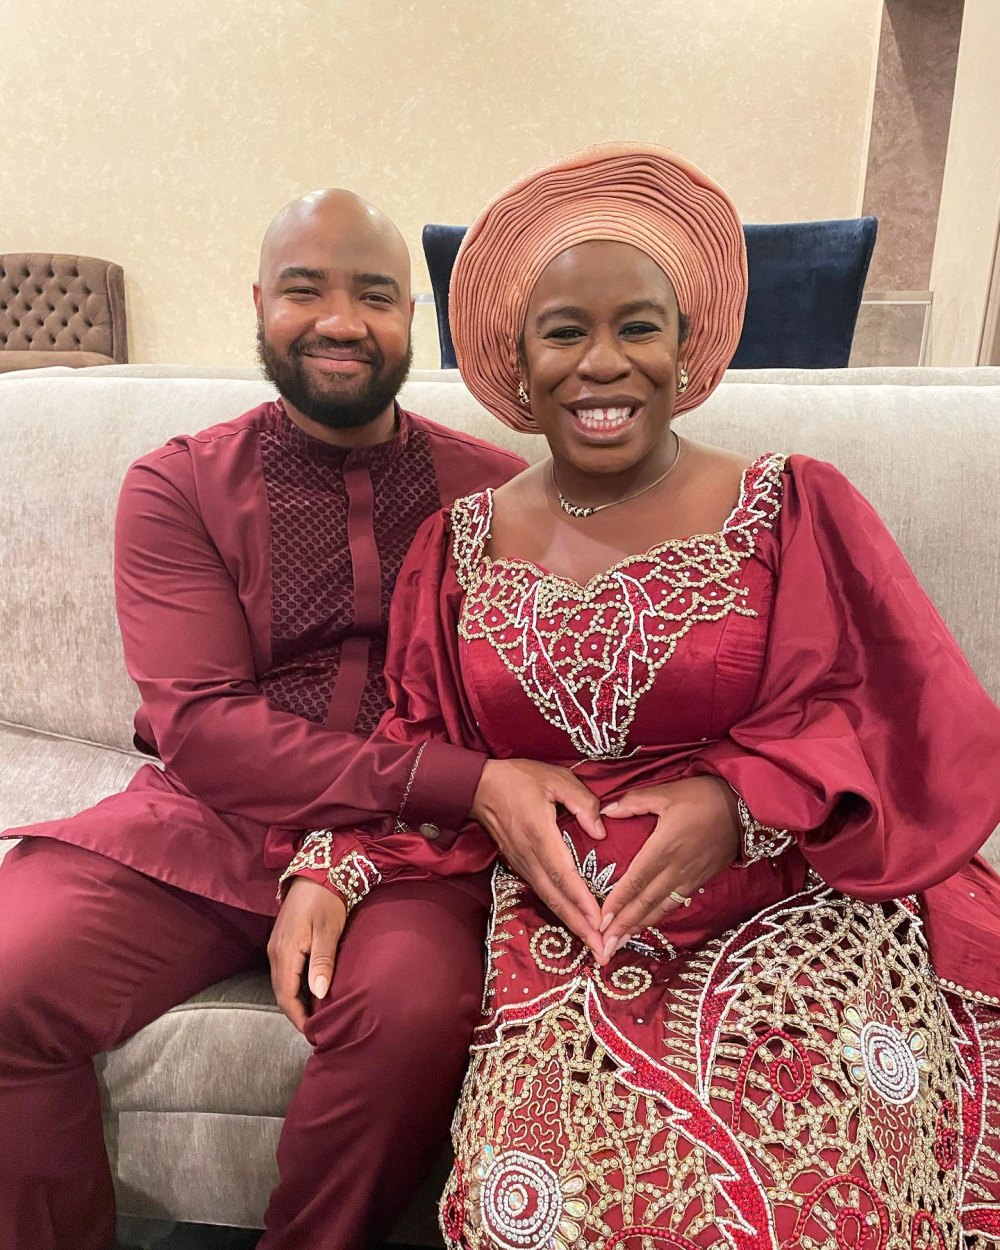 How Pregnant Uzo Abuda Husband Robert Sweeting Is Doting on Her Before Welcoming Baby